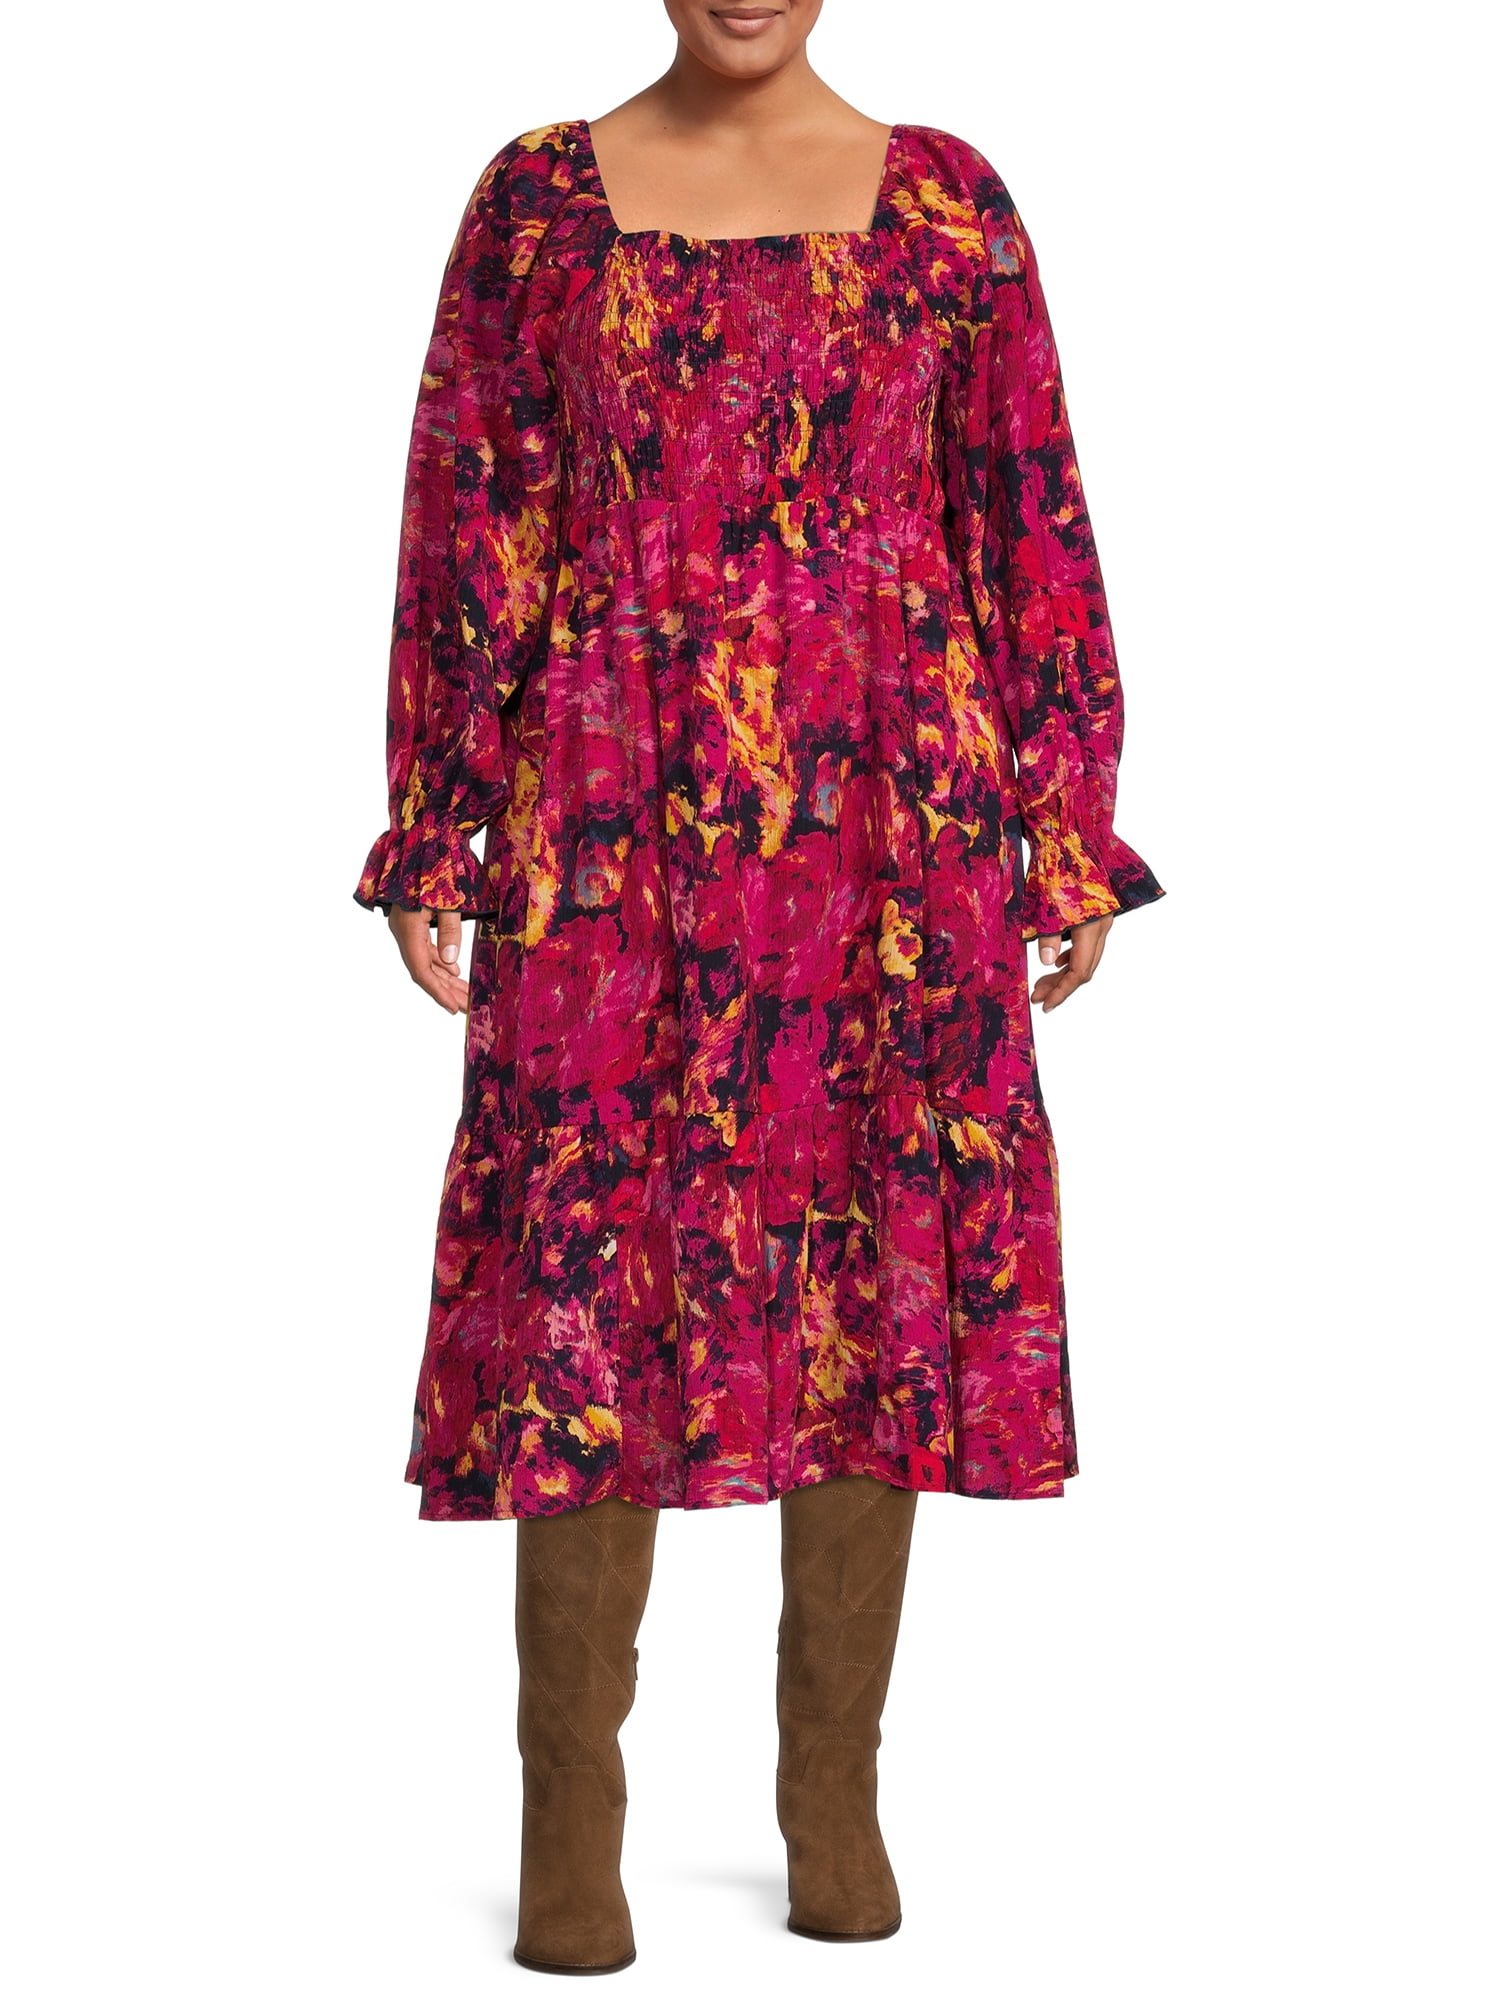 Terra & Sky Women's Plus Size Square Neck Peasant Dress - Walmart.com